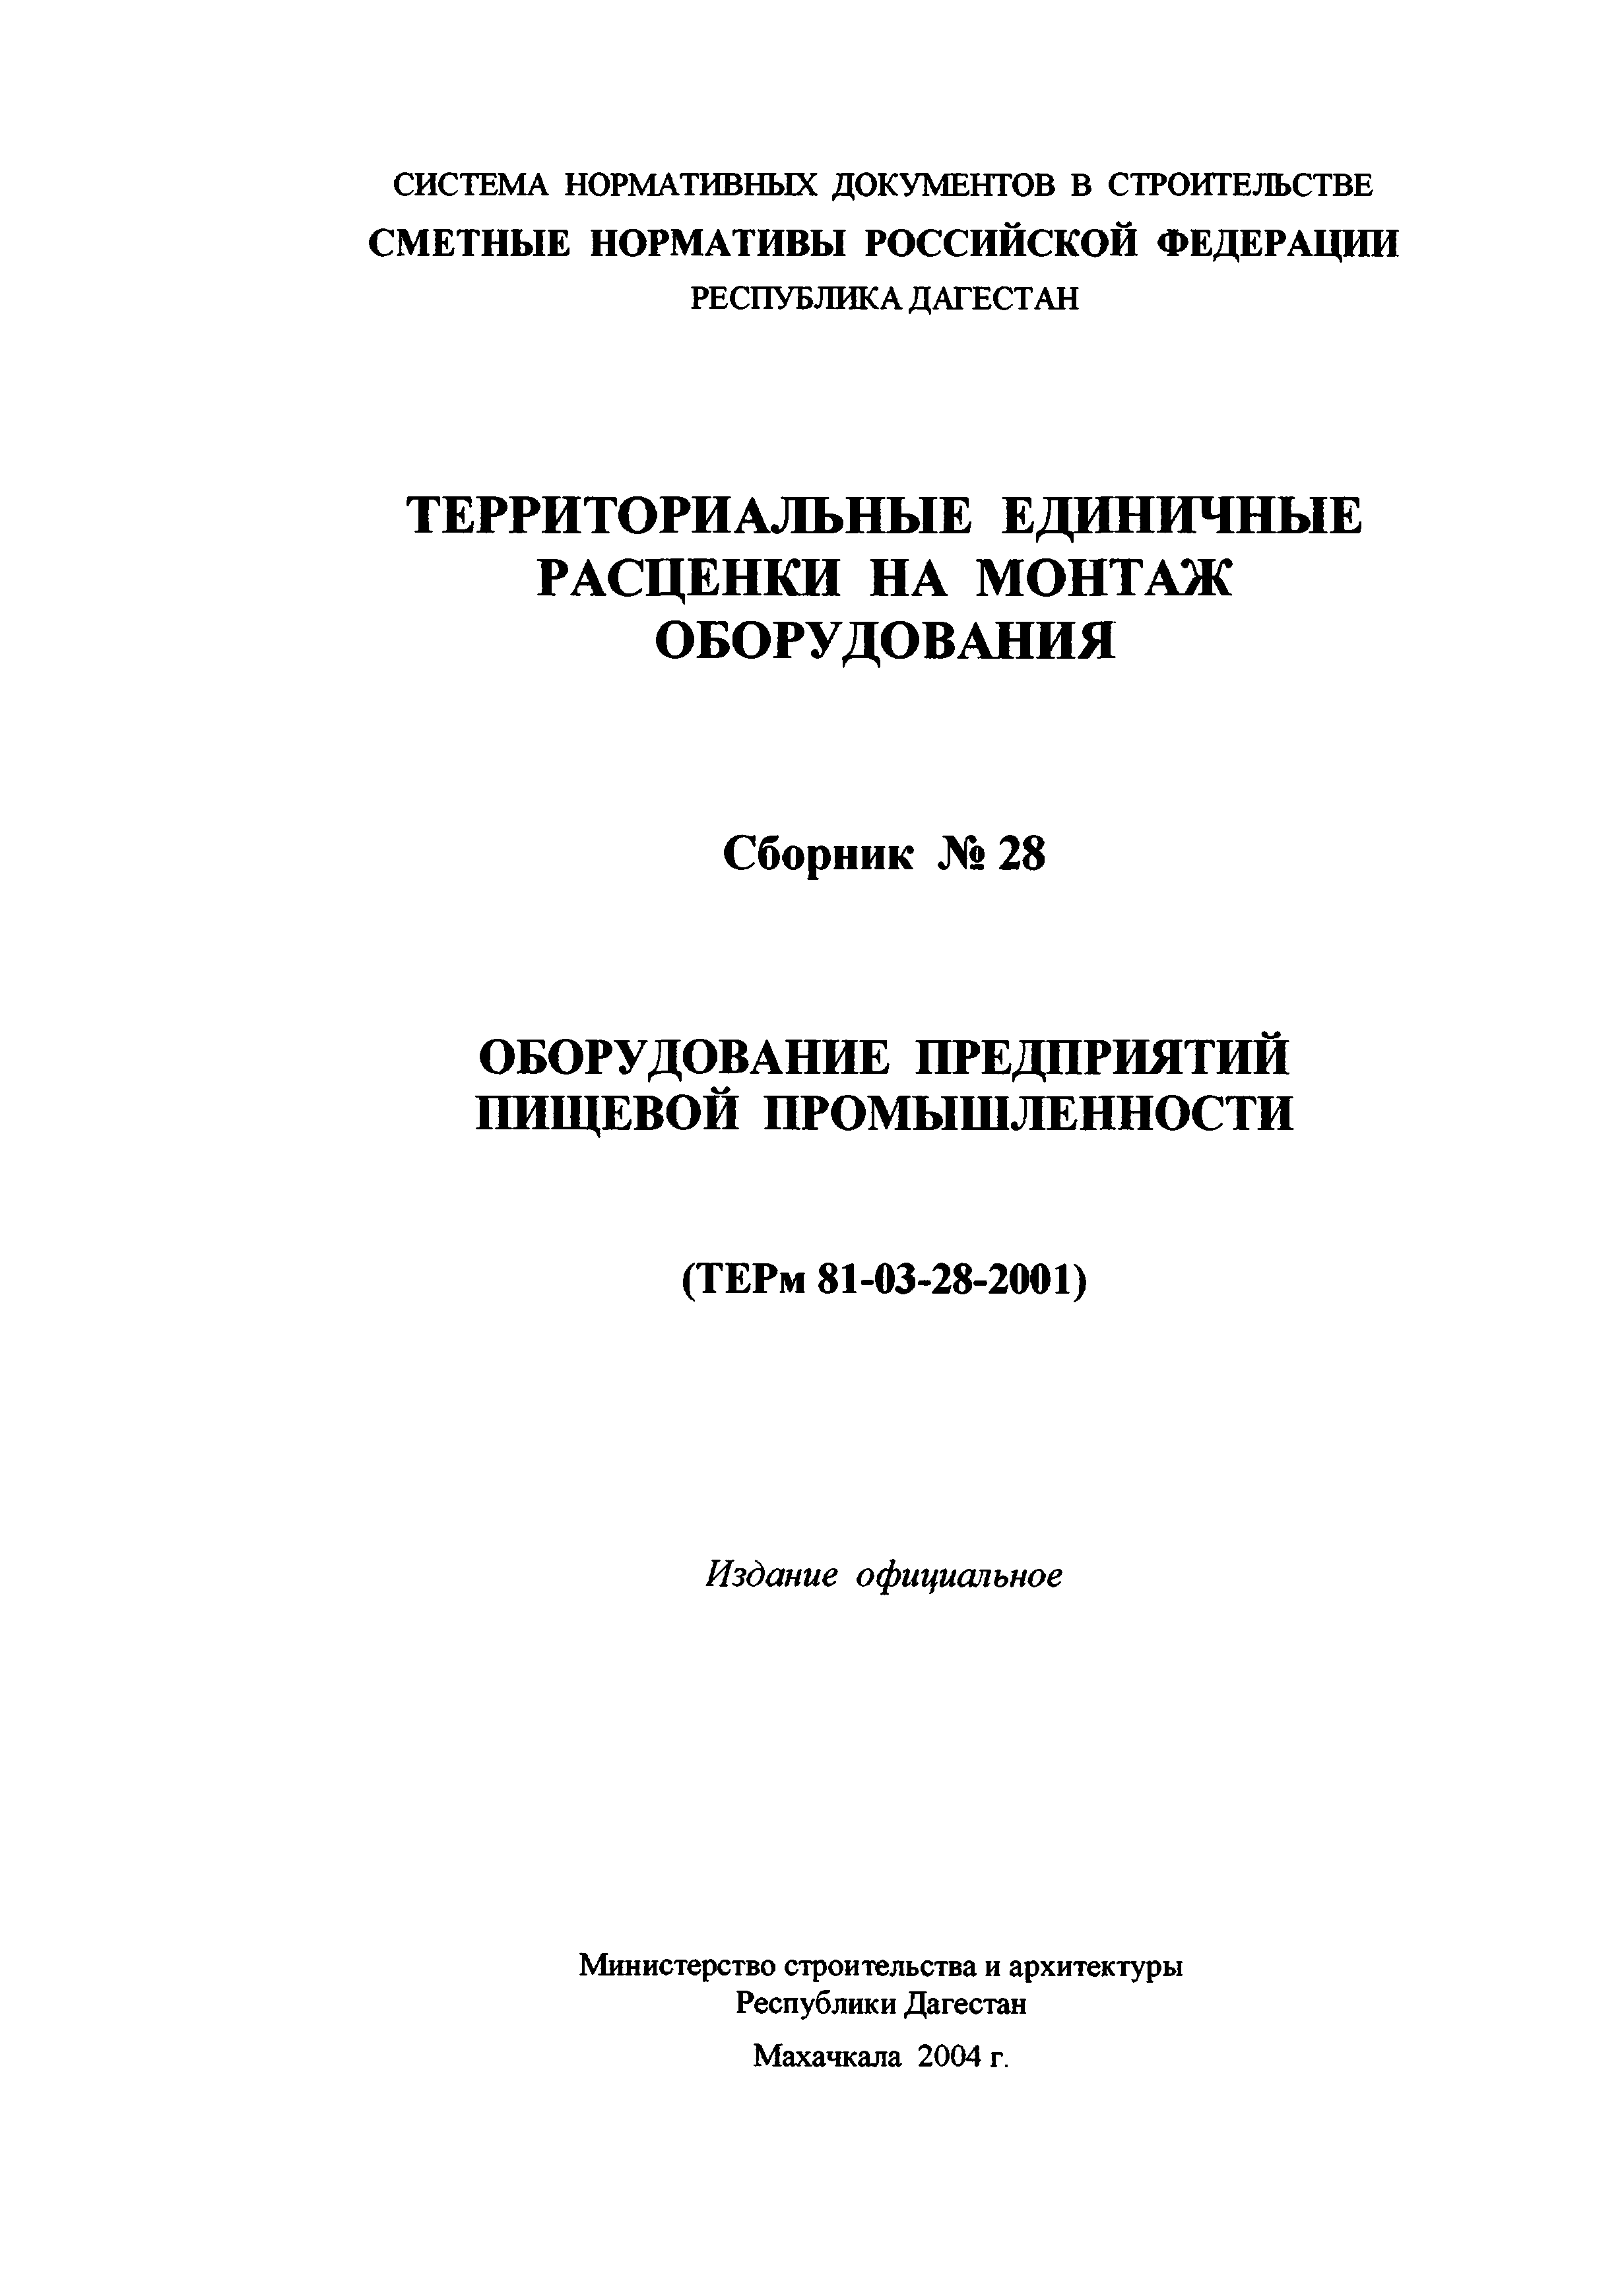 ТЕРм Республика Дагестан 2001-28